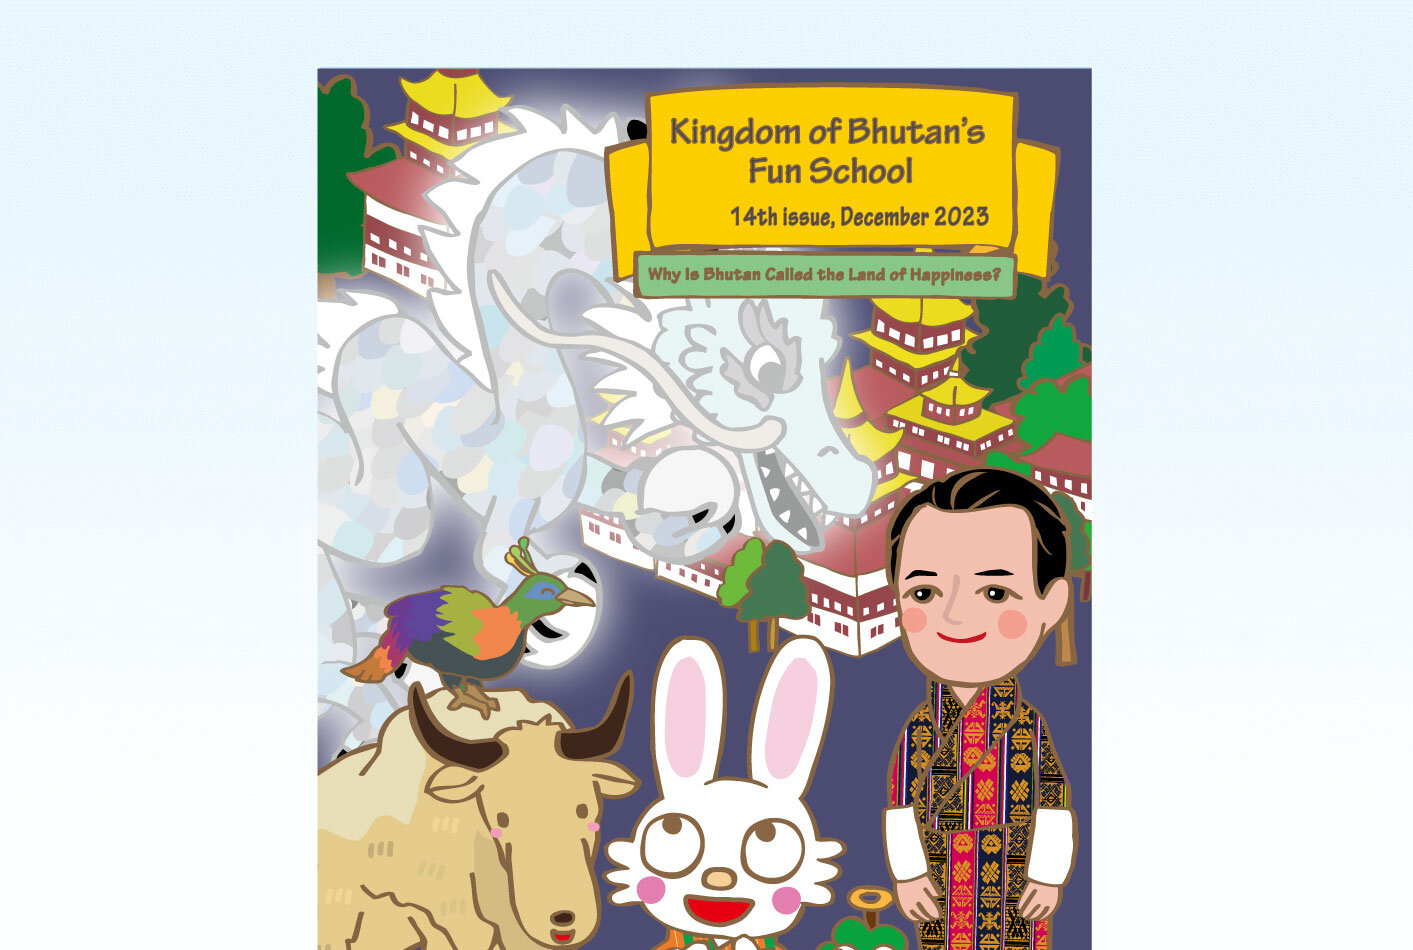 
Kingdom of Bhutan's Fun School